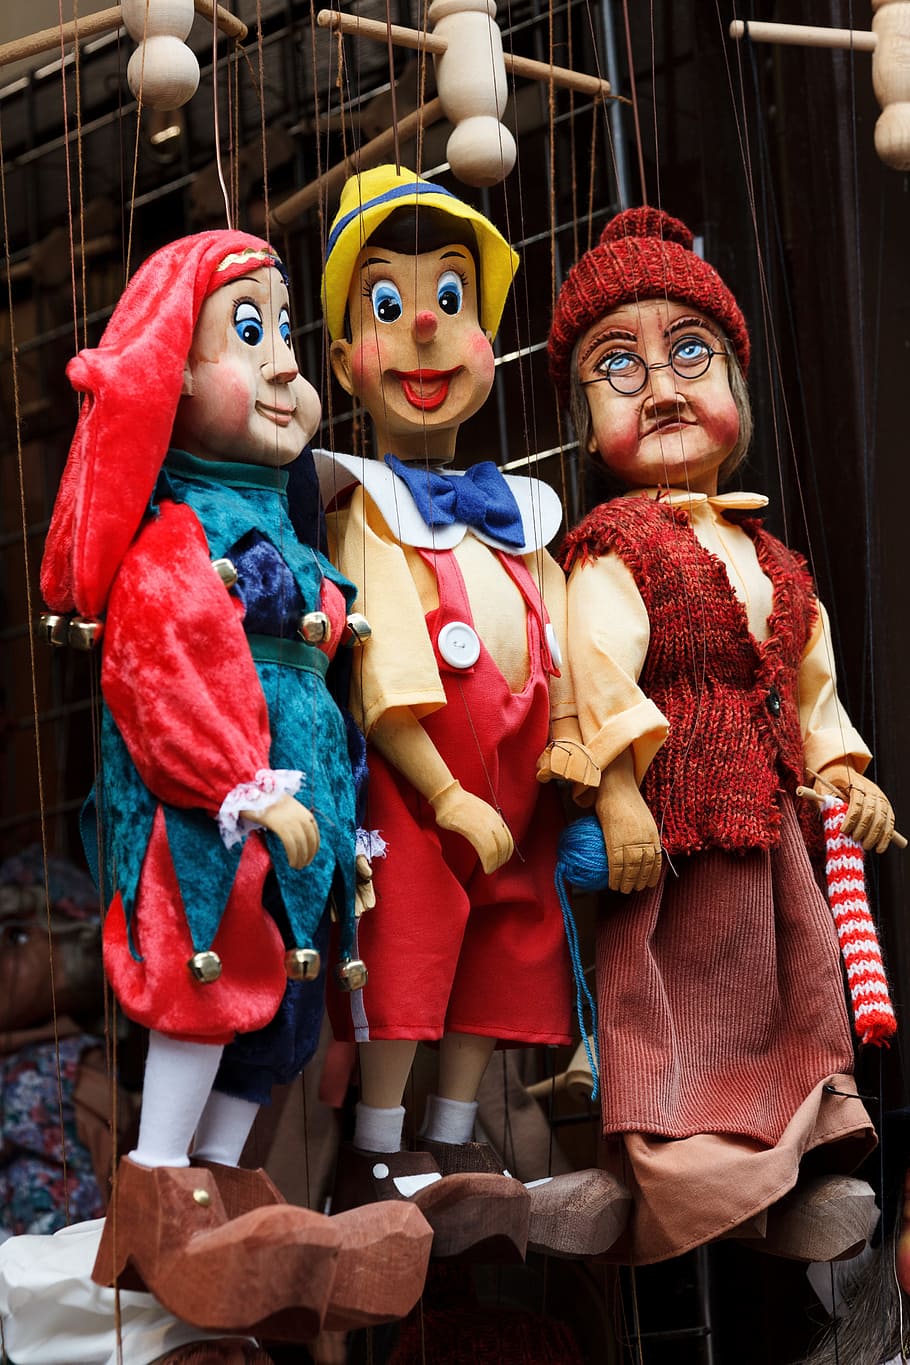 boneka pinocchio, Klasik, Berwarna-warni, Boneka, Wajah, Sosok, tokoh, figurine, gantung, orang-orang